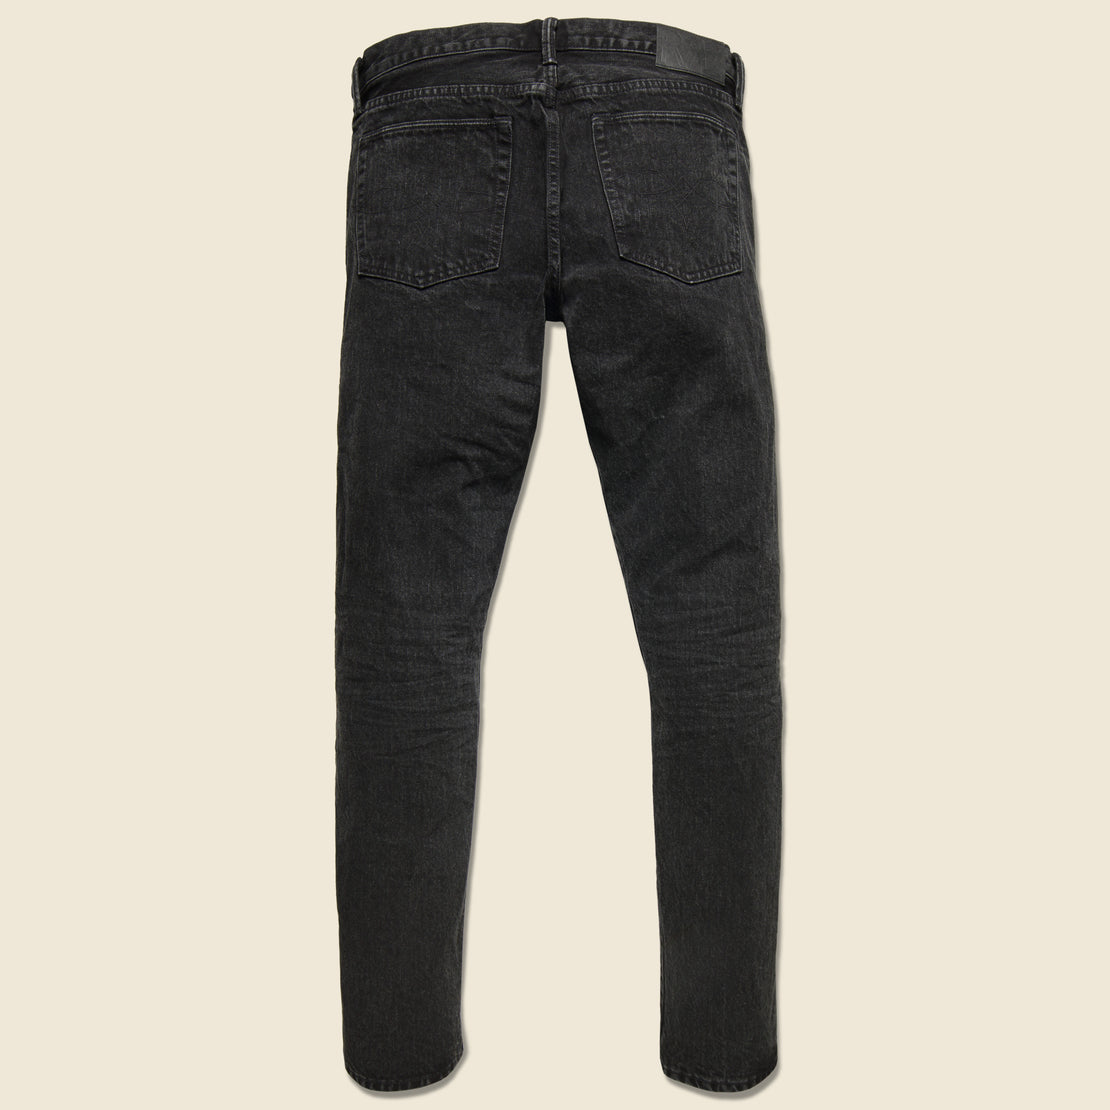 Slim Narrow Jean - Worn-In Black - RRL - STAG Provisions - Pants - Denim